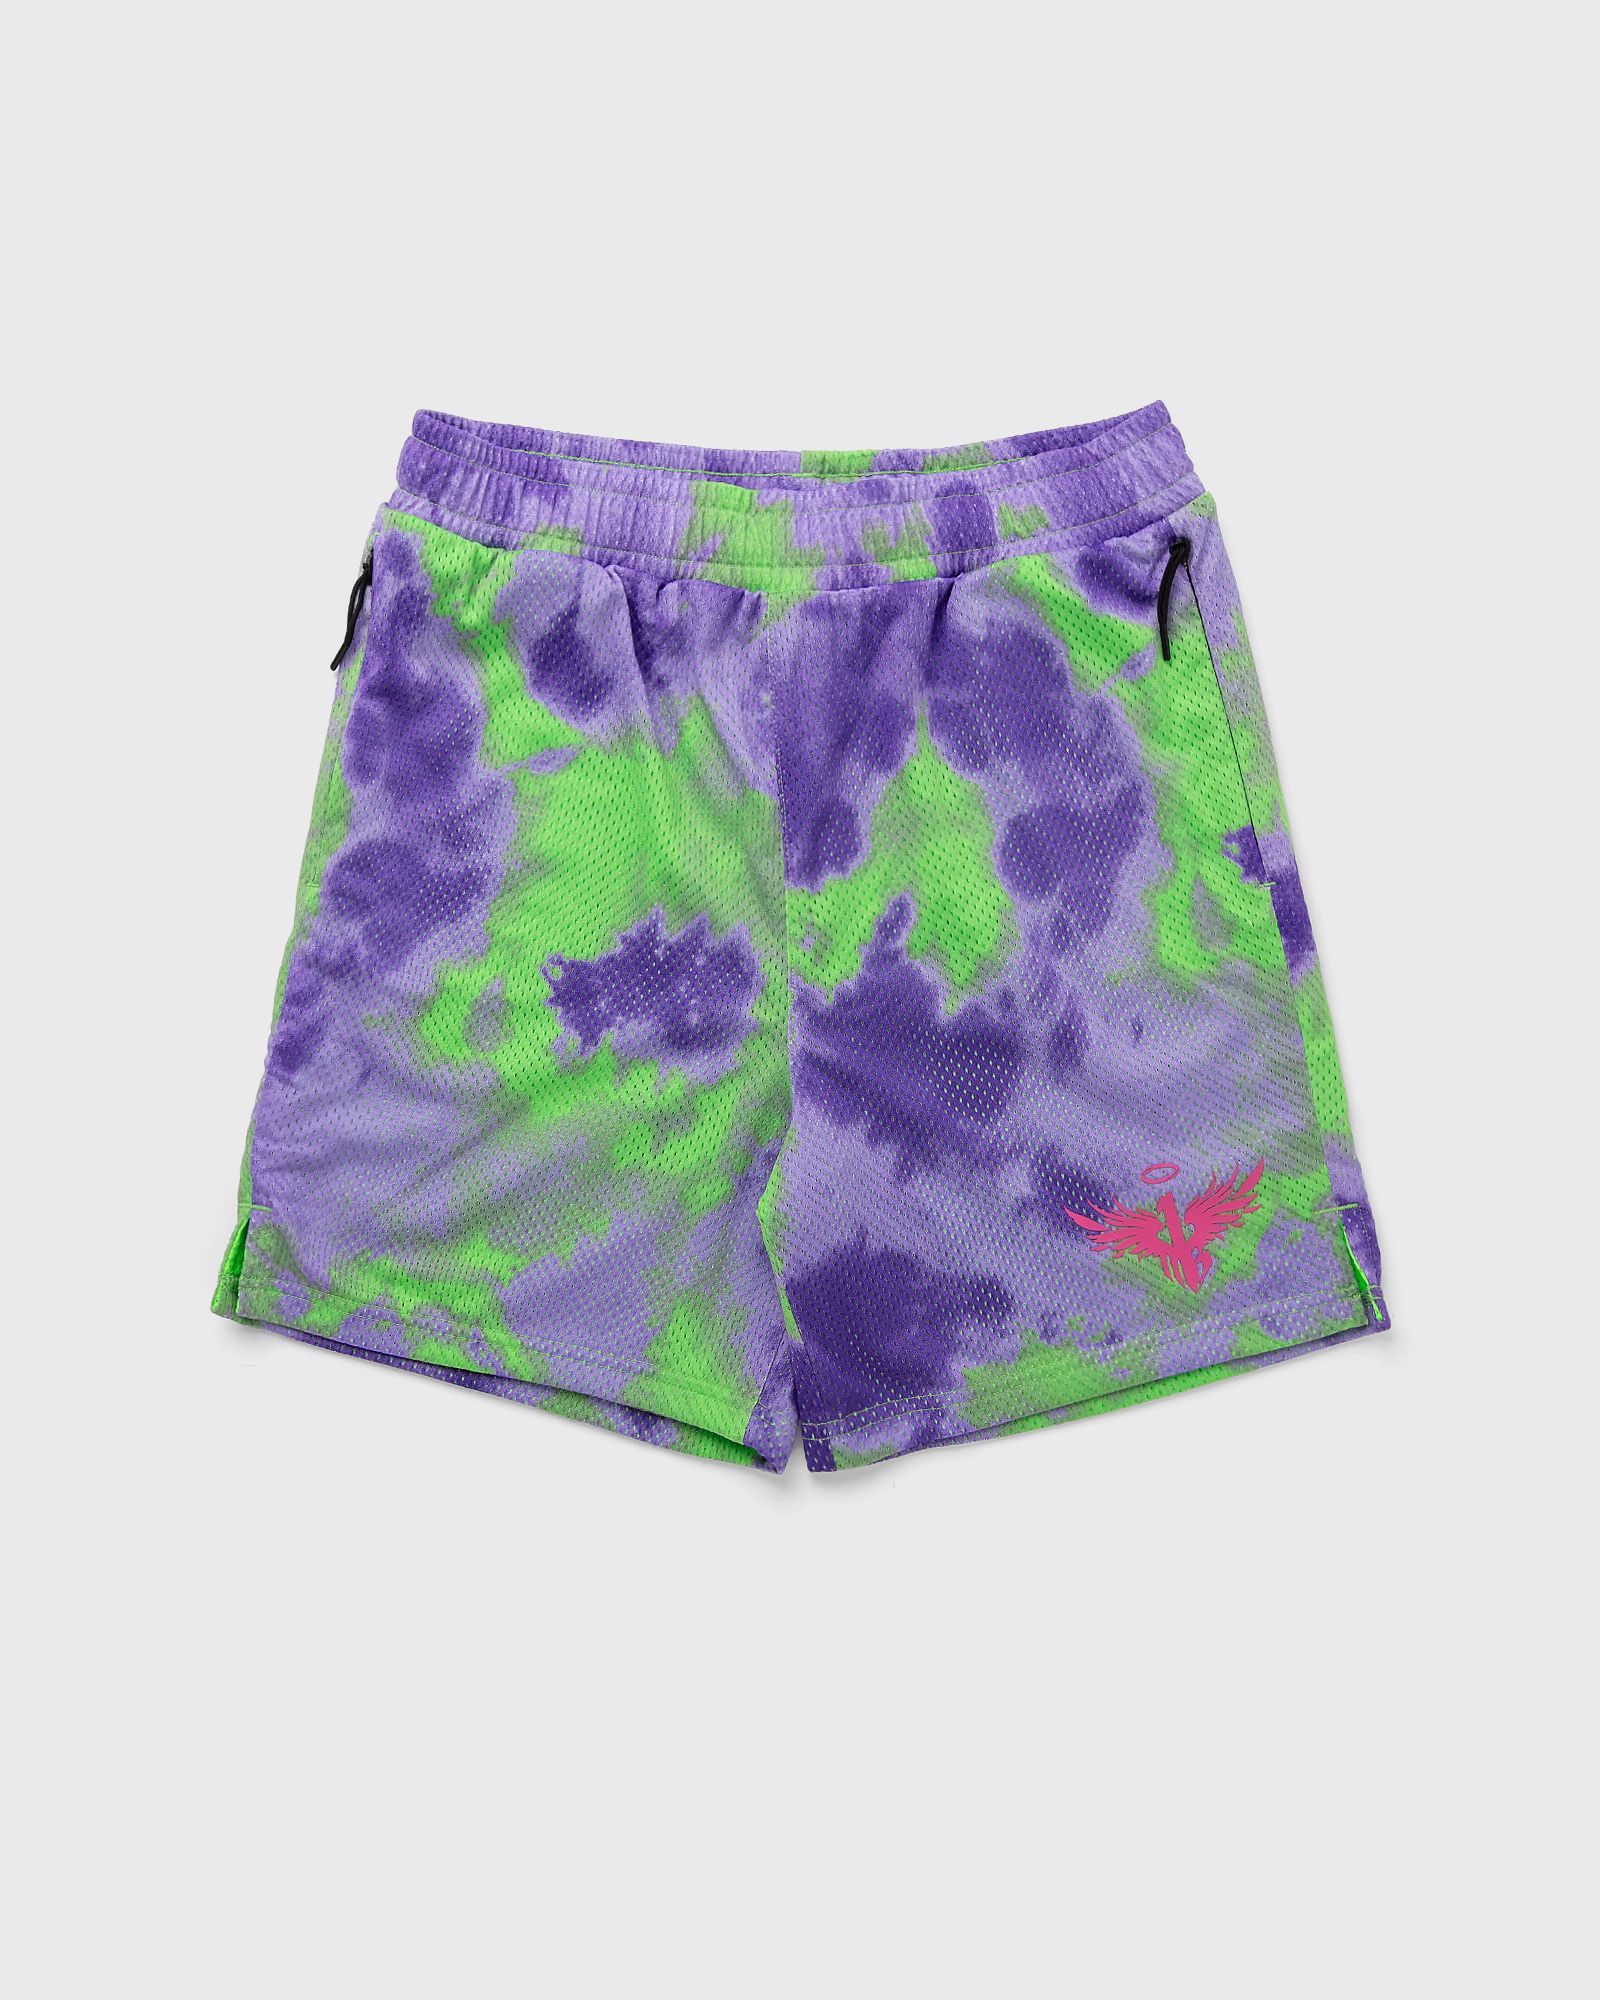 Puma - melo x toxic aop short i men sport & team shorts green|purple in größe:xl